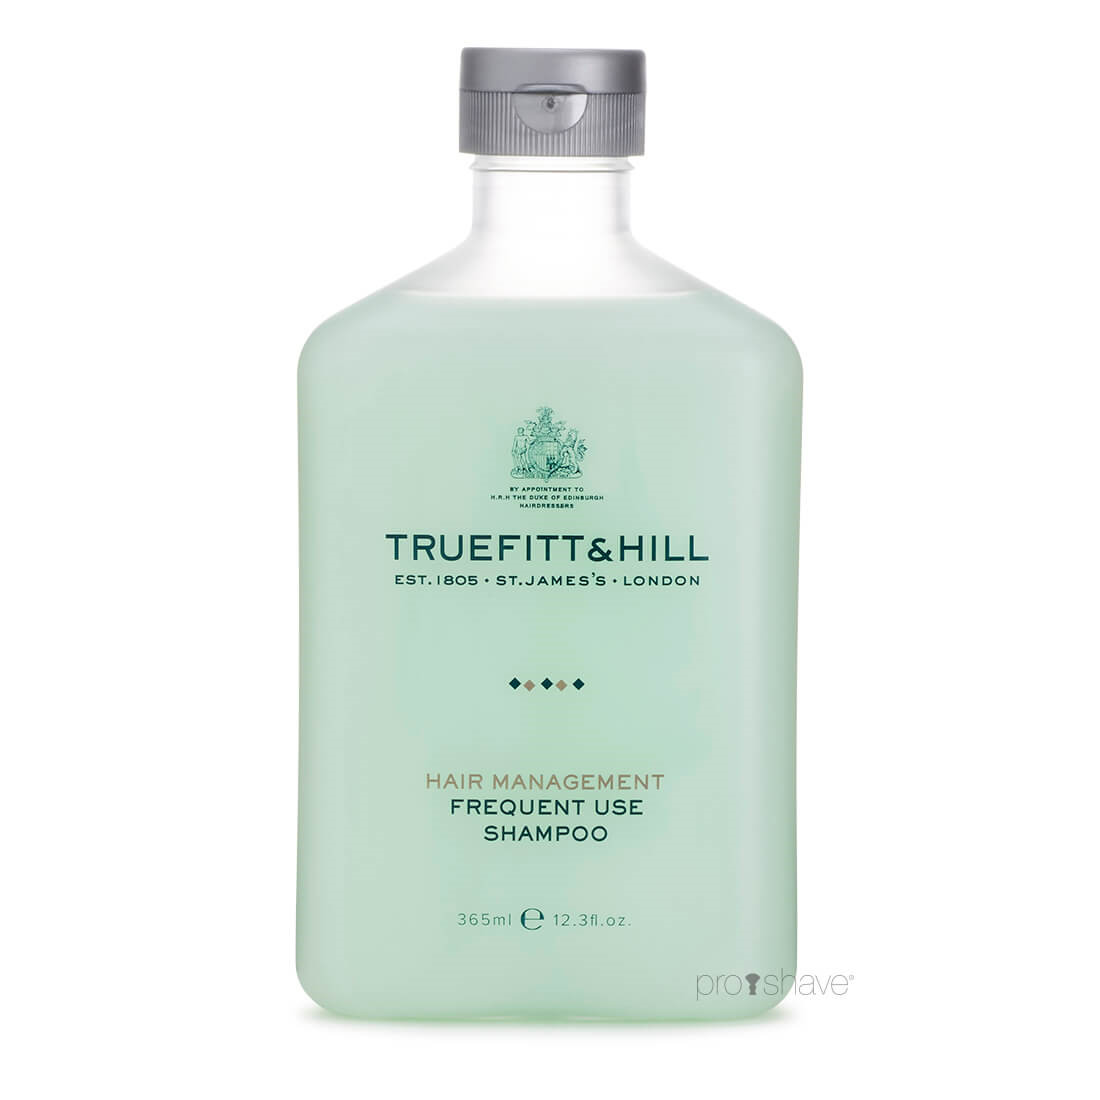 #2 - Truefitt & Hill Frequent Use Shampoo, 365 ml.